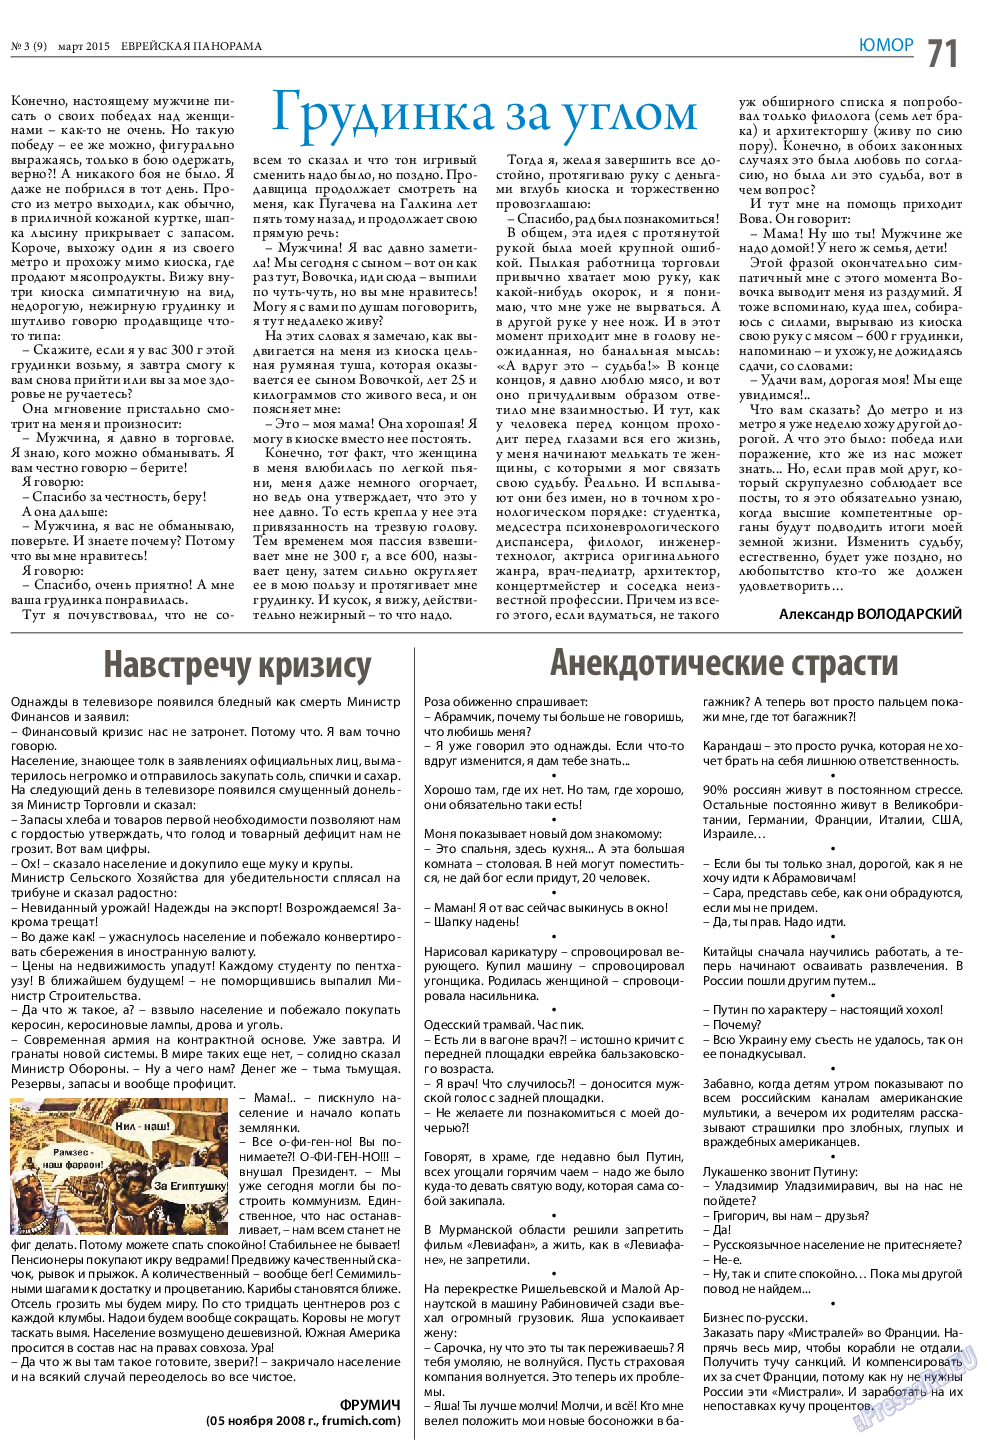 Еврейская панорама, газета. 2015 №3 стр.71